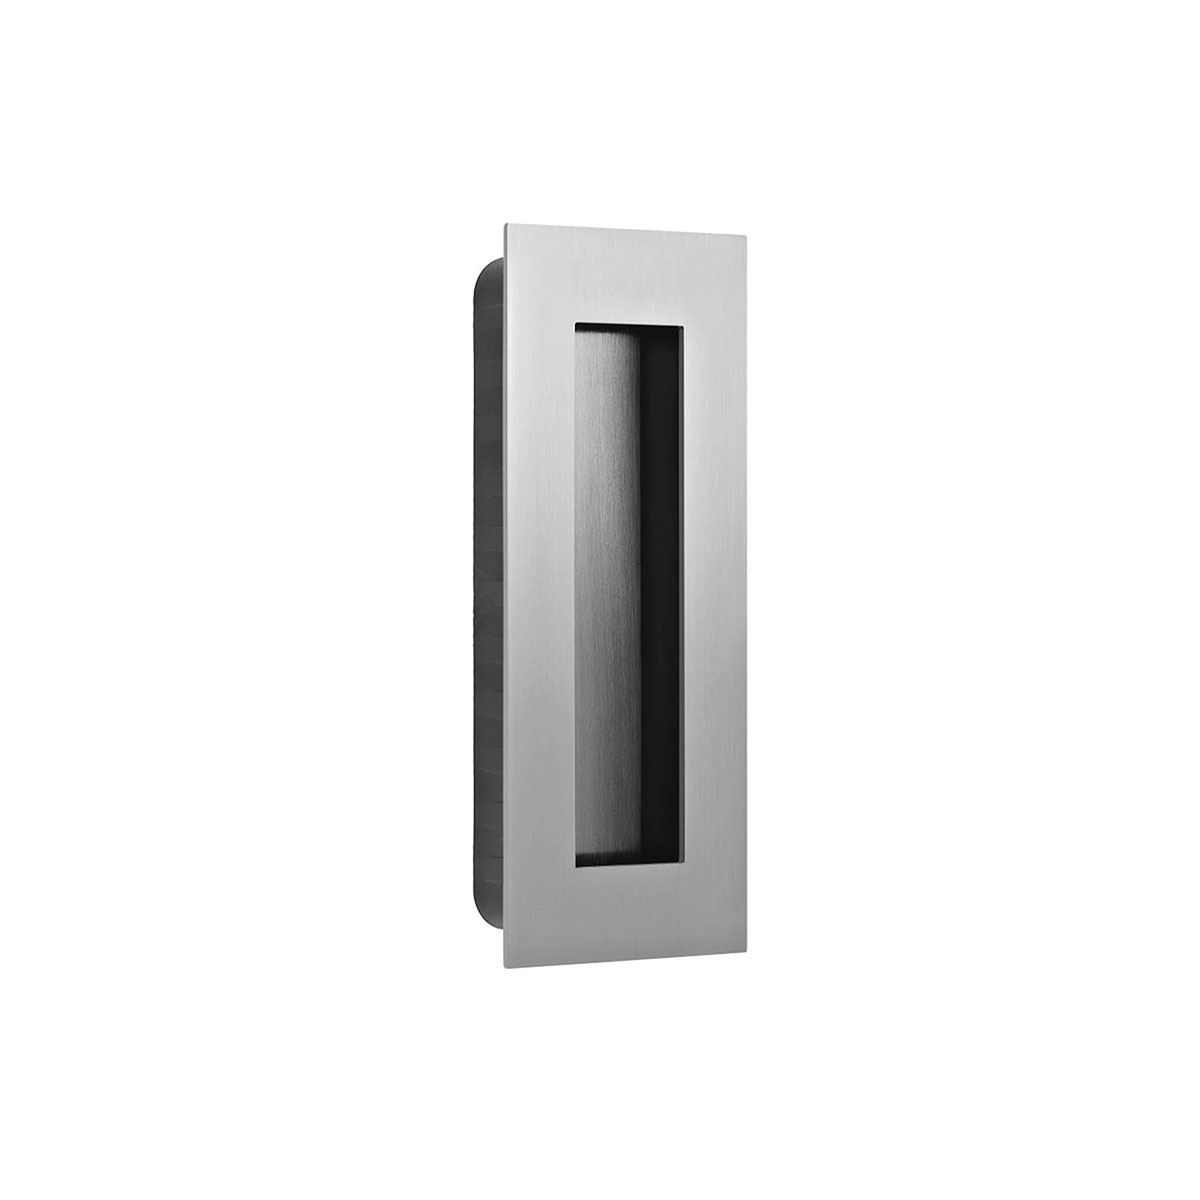 MED - Cazoleta rectangular para encastrar en puerta corredera tornillos ocultos